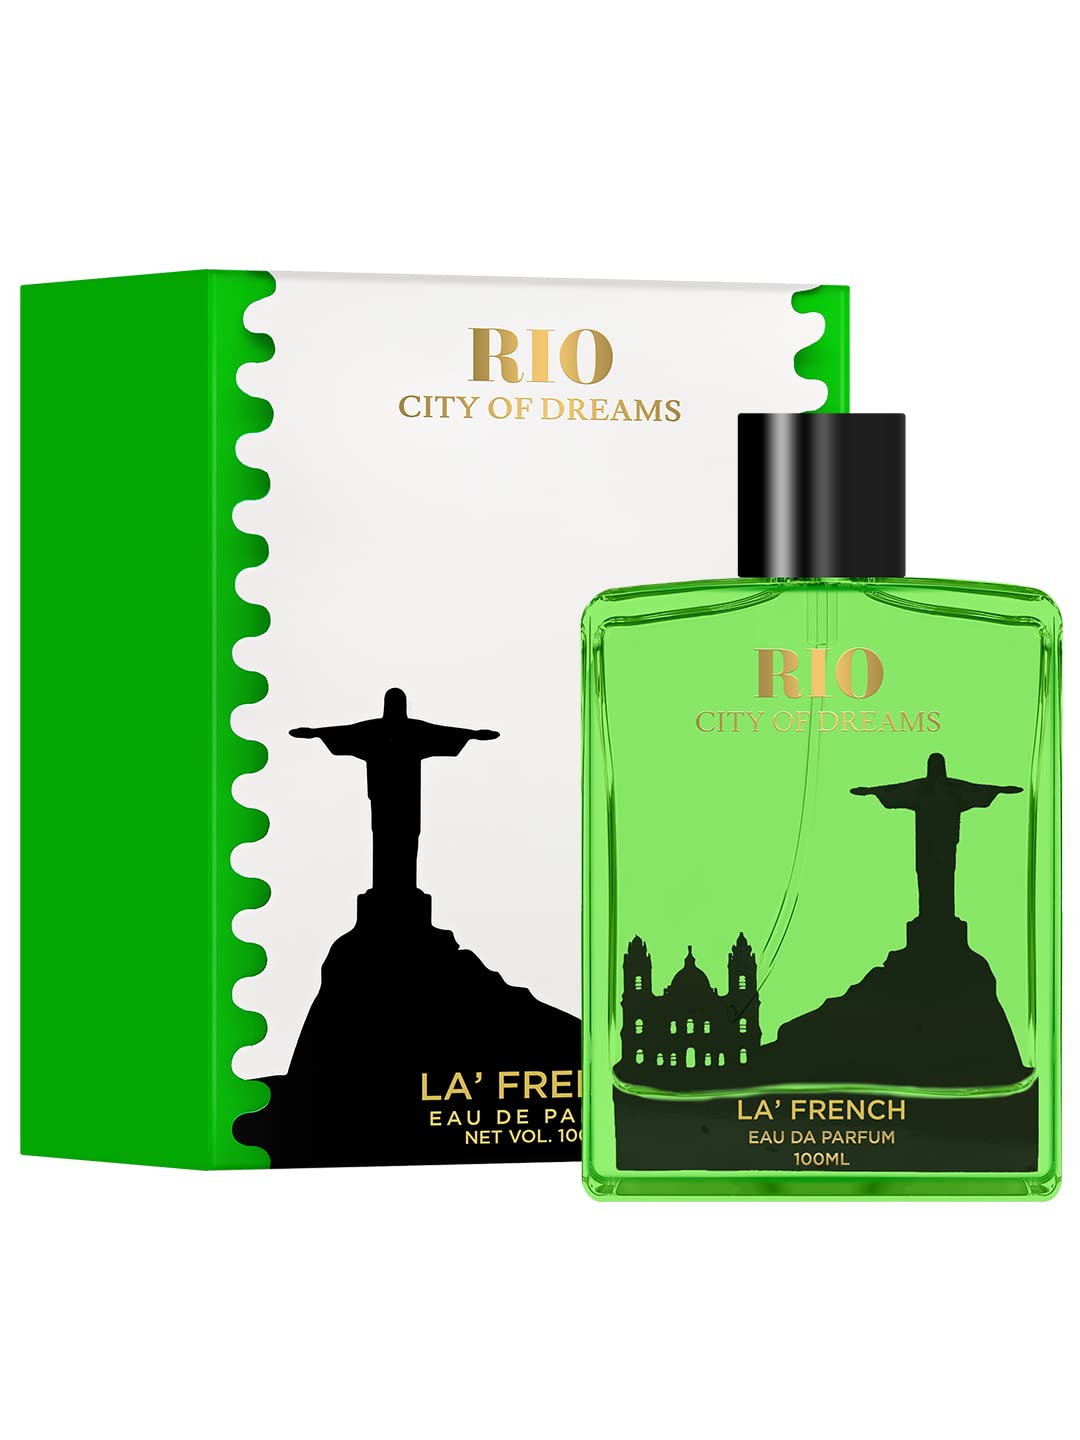 La french Rio Perfume for Men - 100ml | Luxury Gift | Extra Long Lasting Smell | Premium French Fragrance Scent | Eau De Parfum